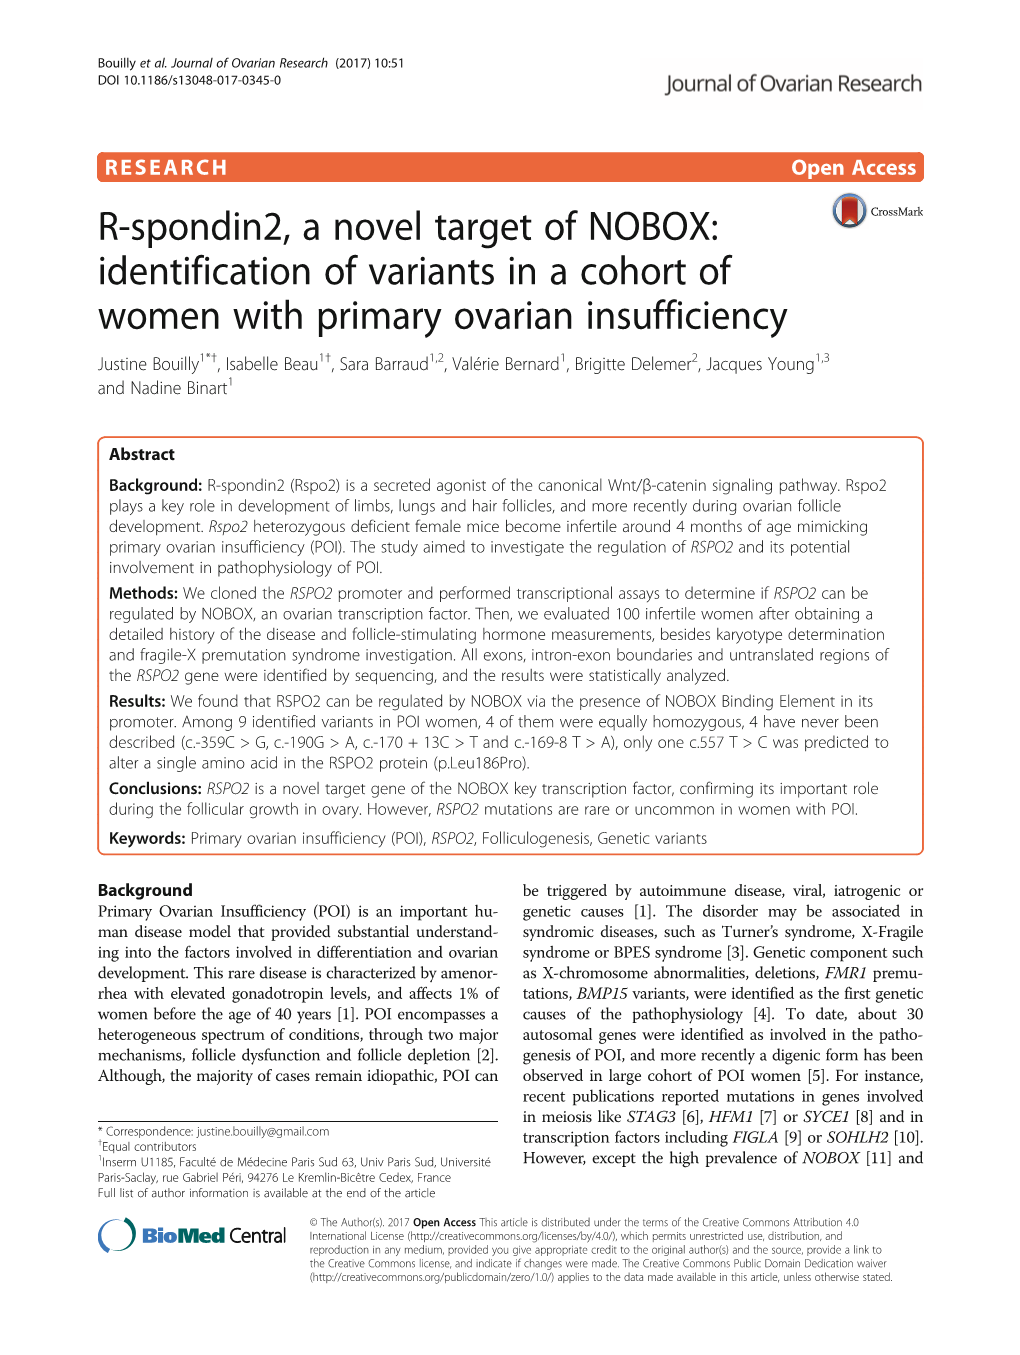 R-Spondin2, a Novel Target of NOBOX: Identification of Variants in a Cohort